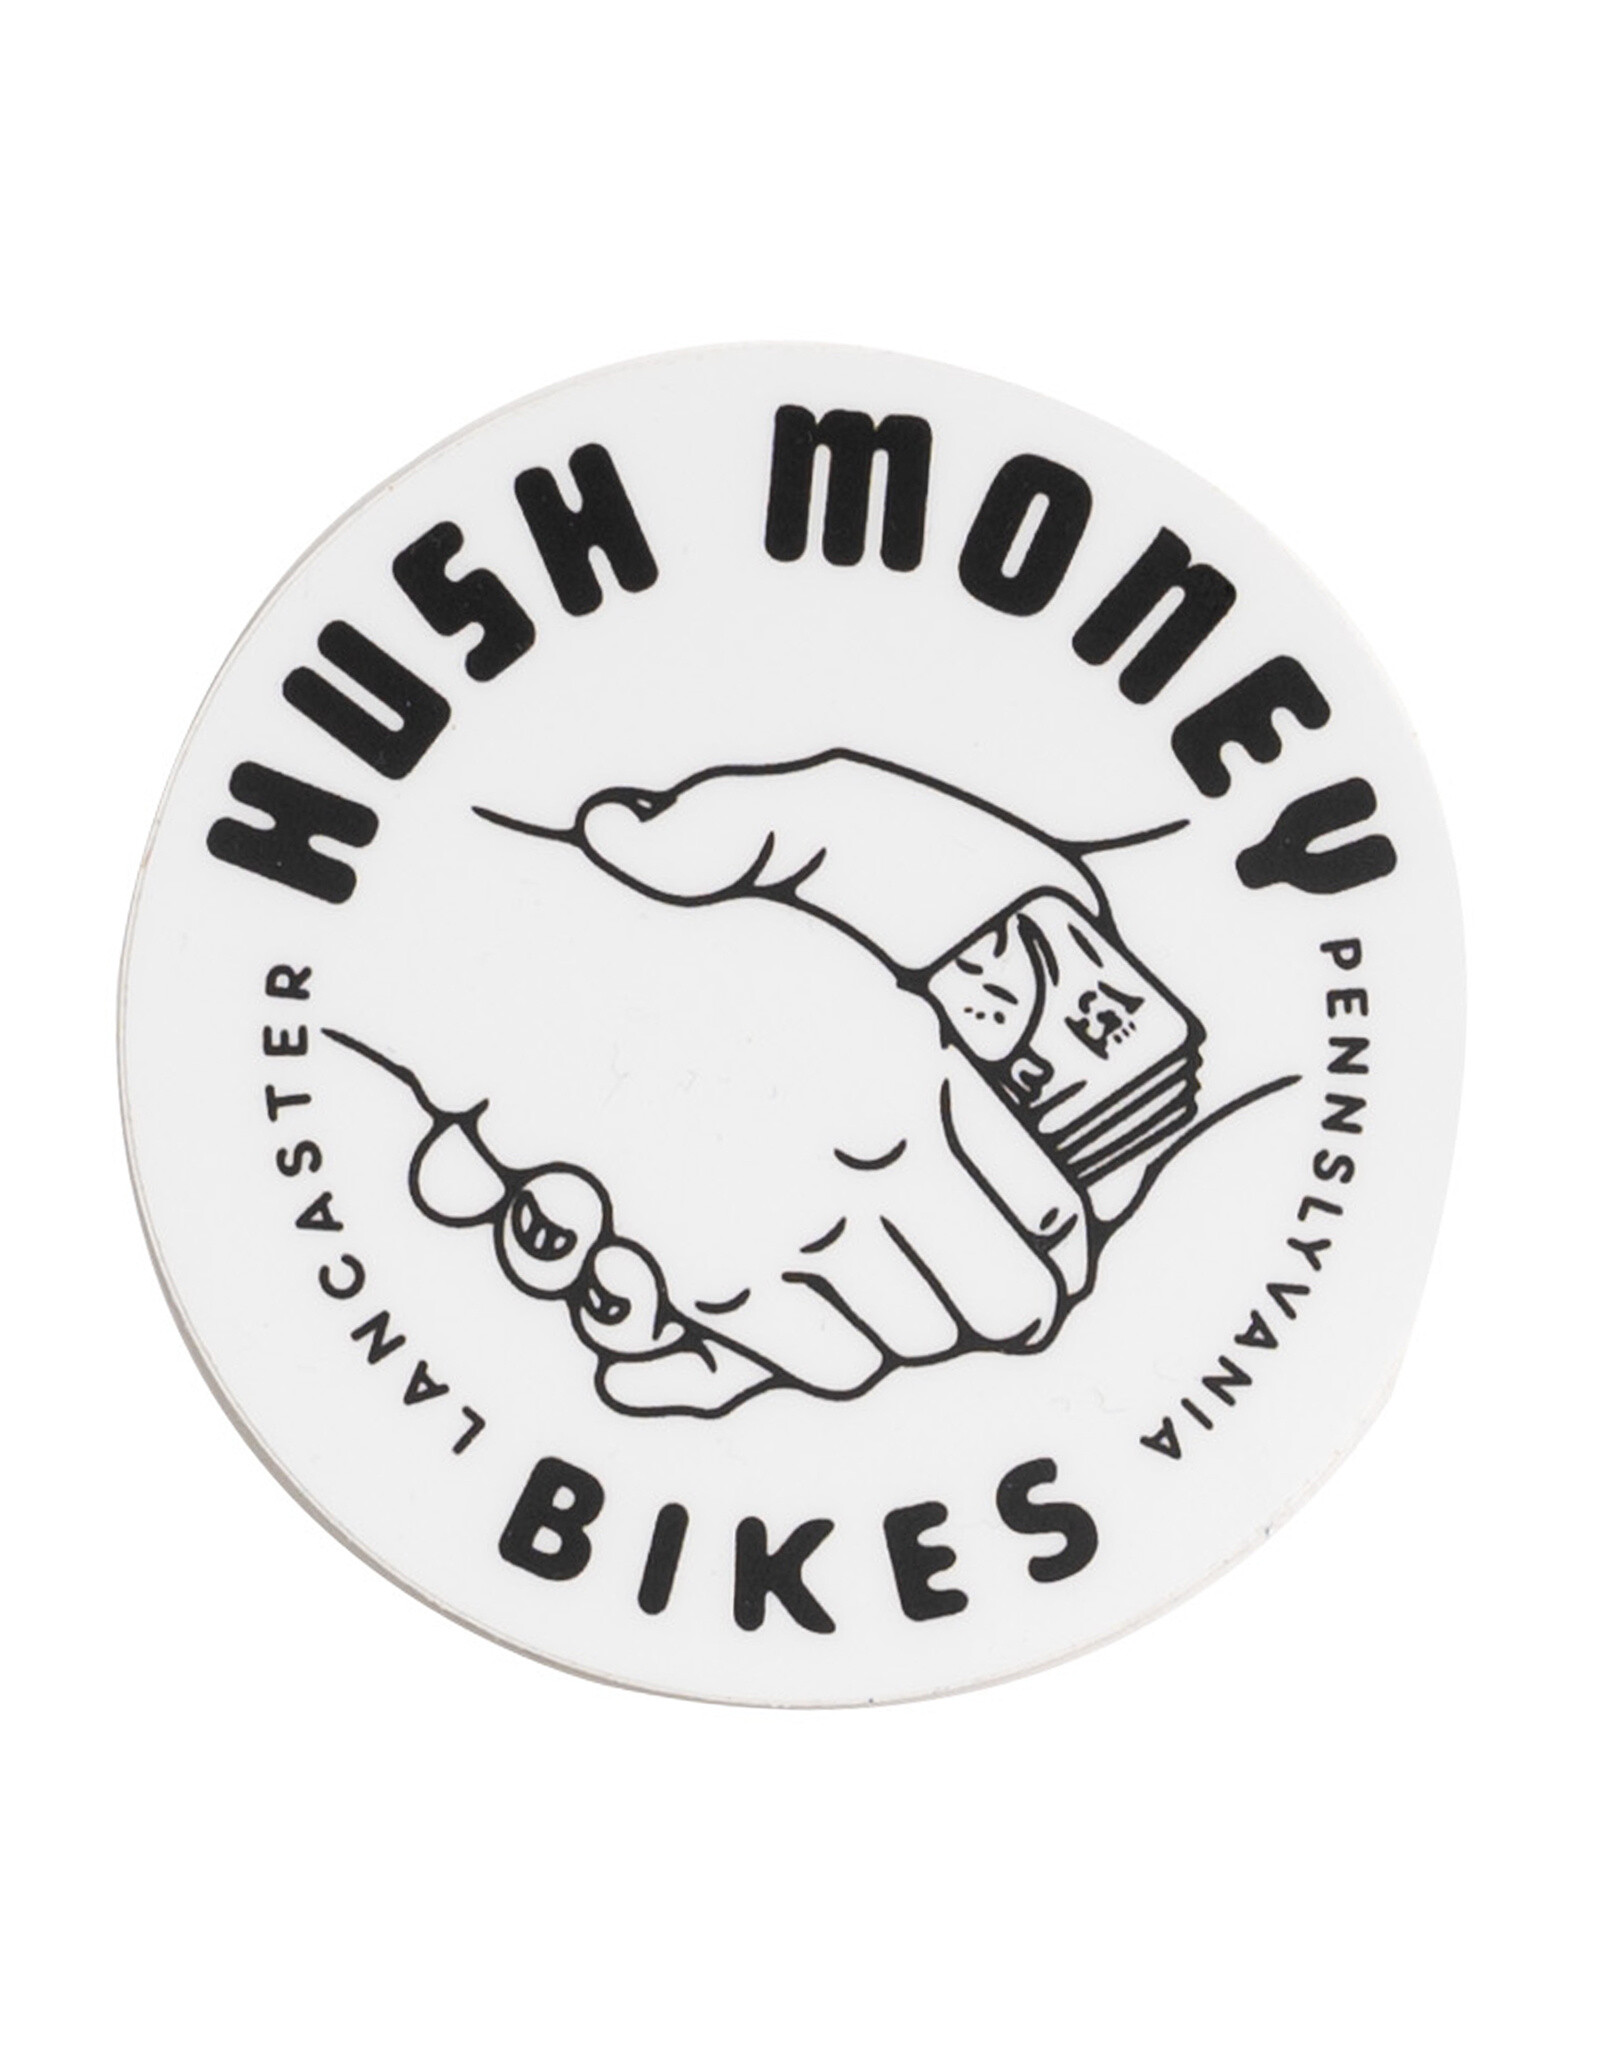 Hush Money Bikes Greased Palms Sticker